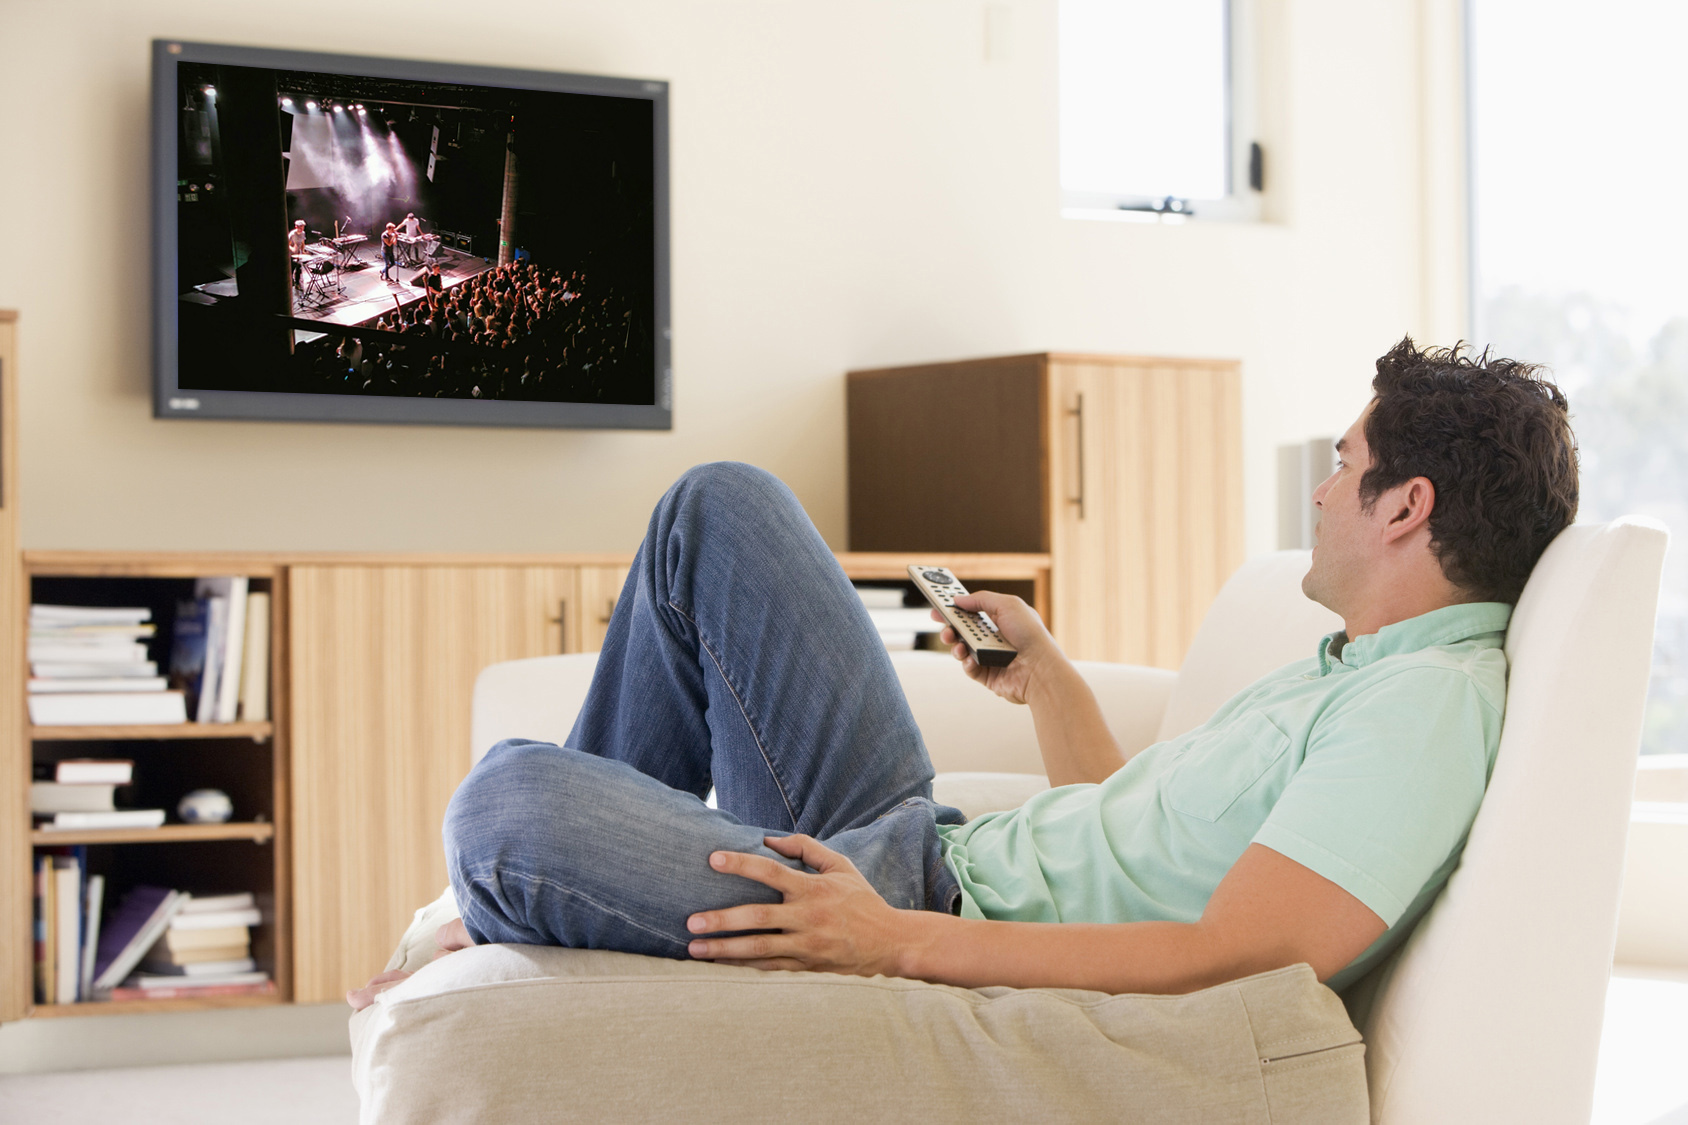 Картинка tv man. Человек перед телевизором. Сидит перед телевизором. Мужчина на диване перед телевизором. Мужчина смотрит телевизор.